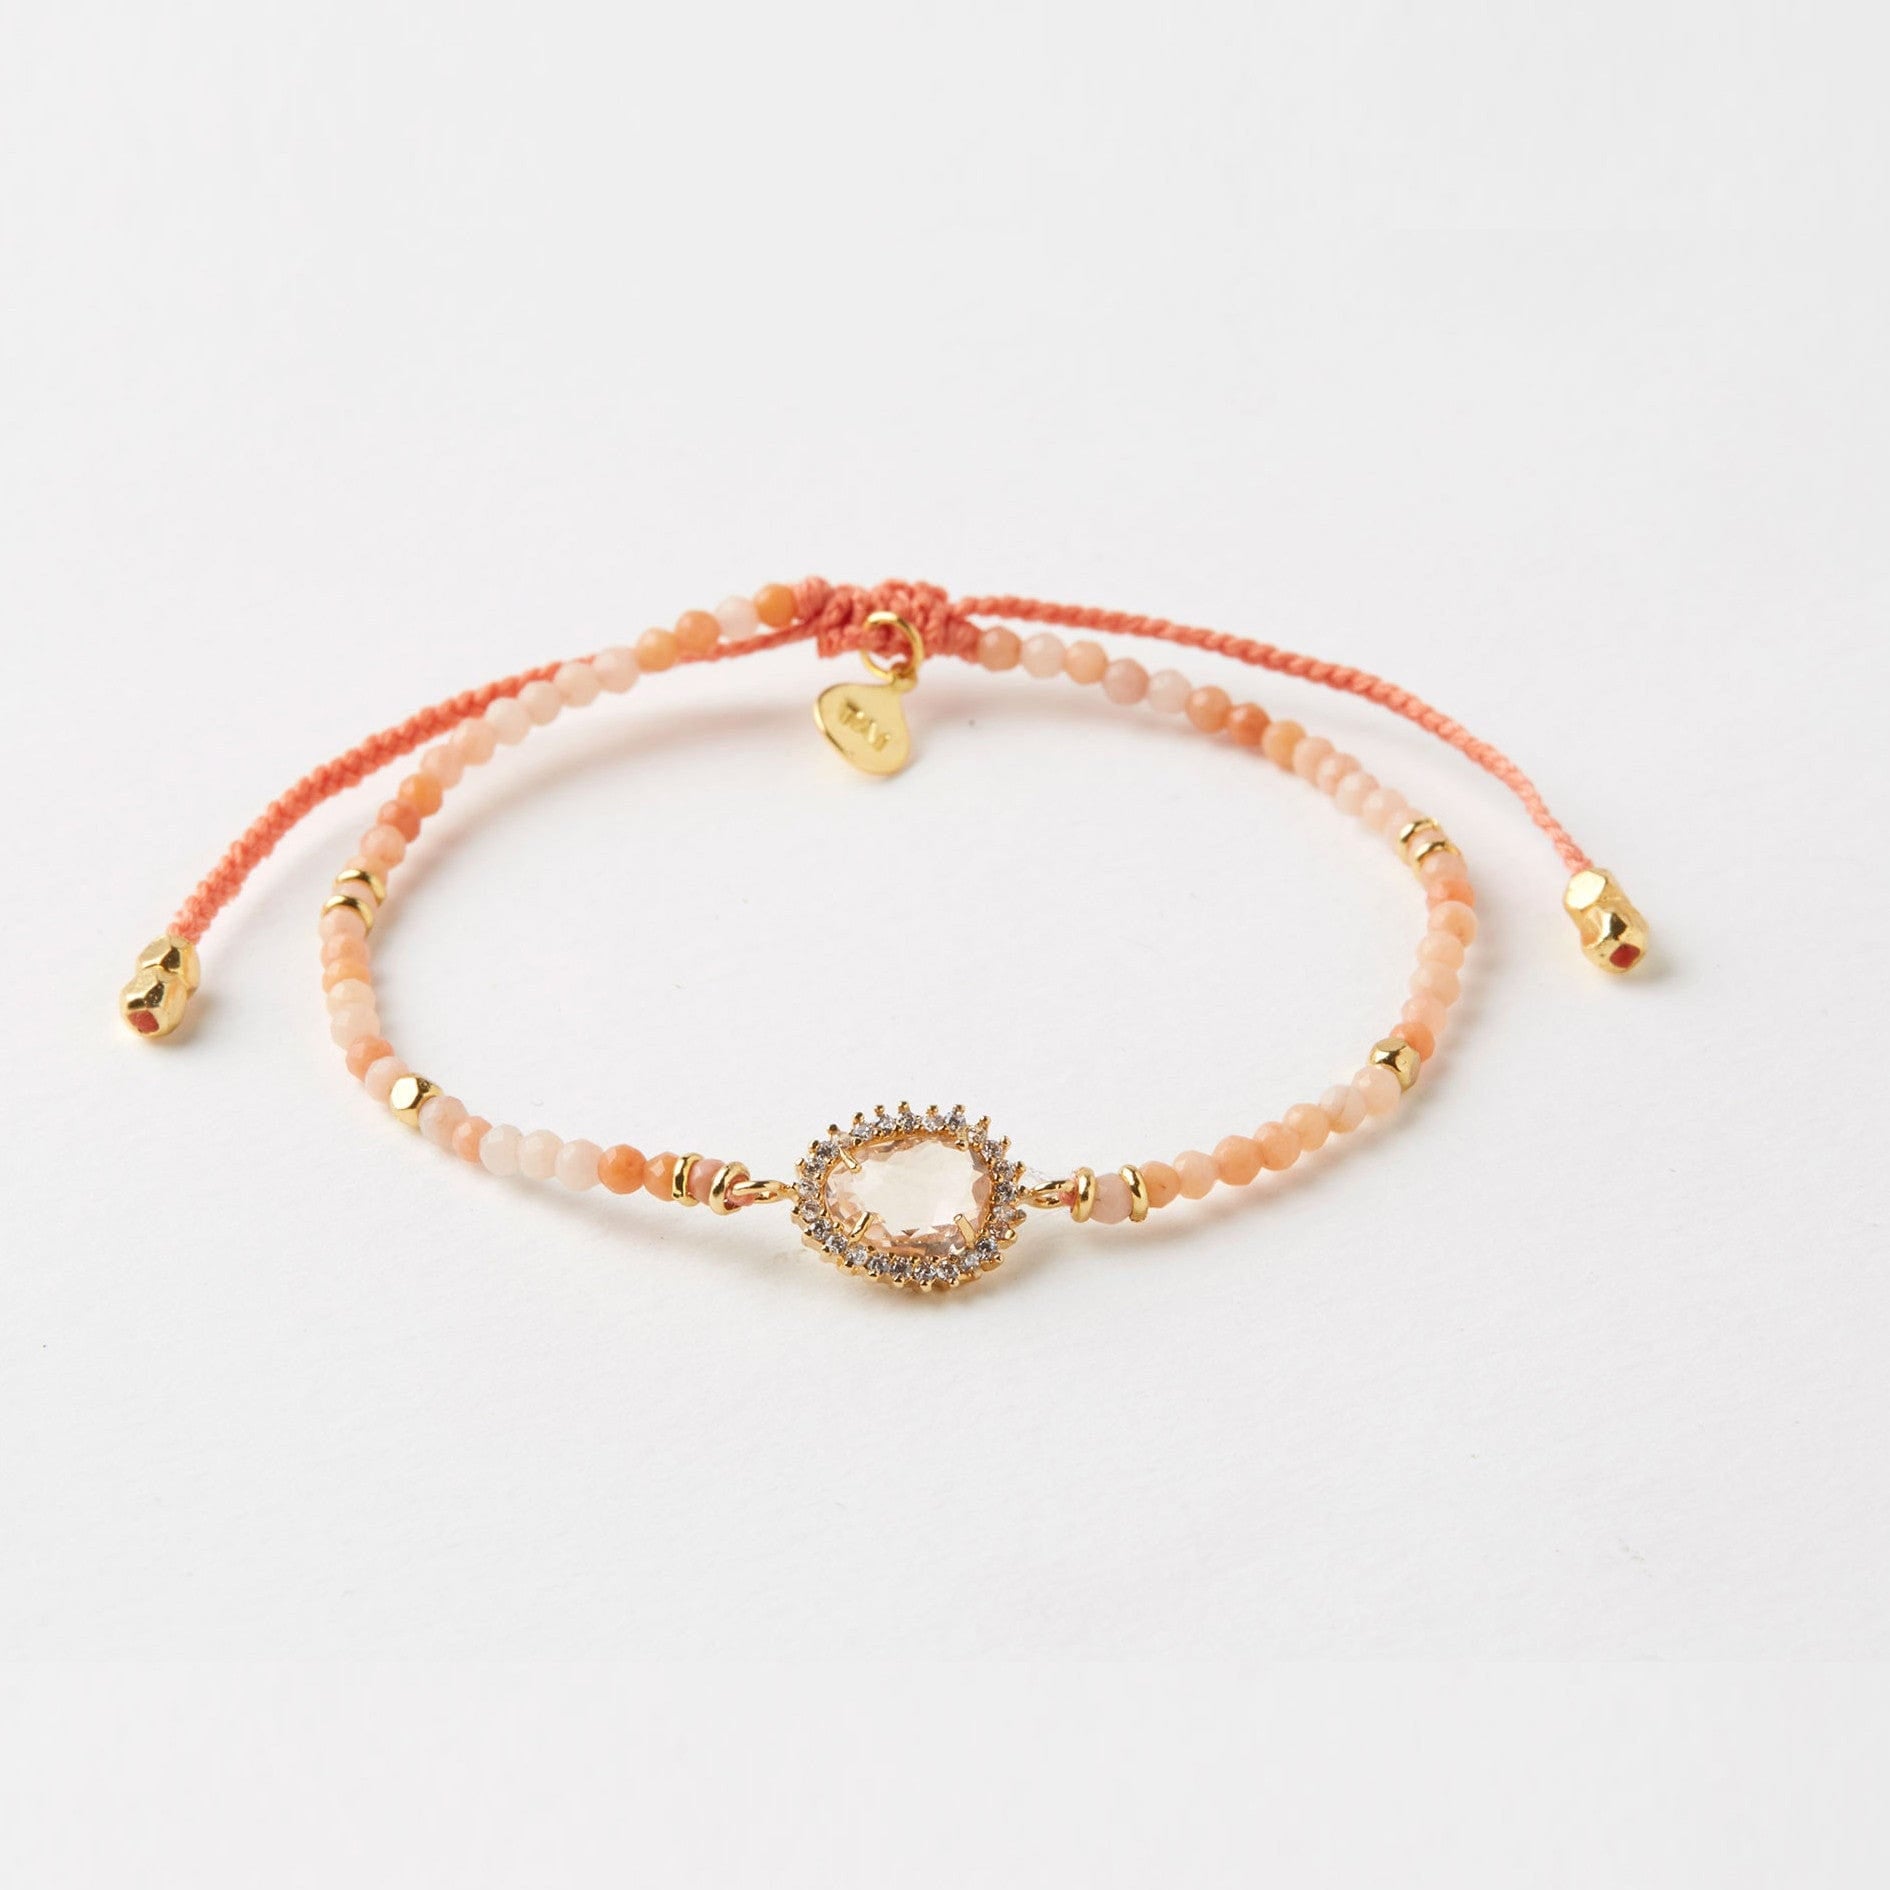 TAI JEWELRY Bracelet Peach Single Beaded Adjustable Bracelet With Large Stone Accent